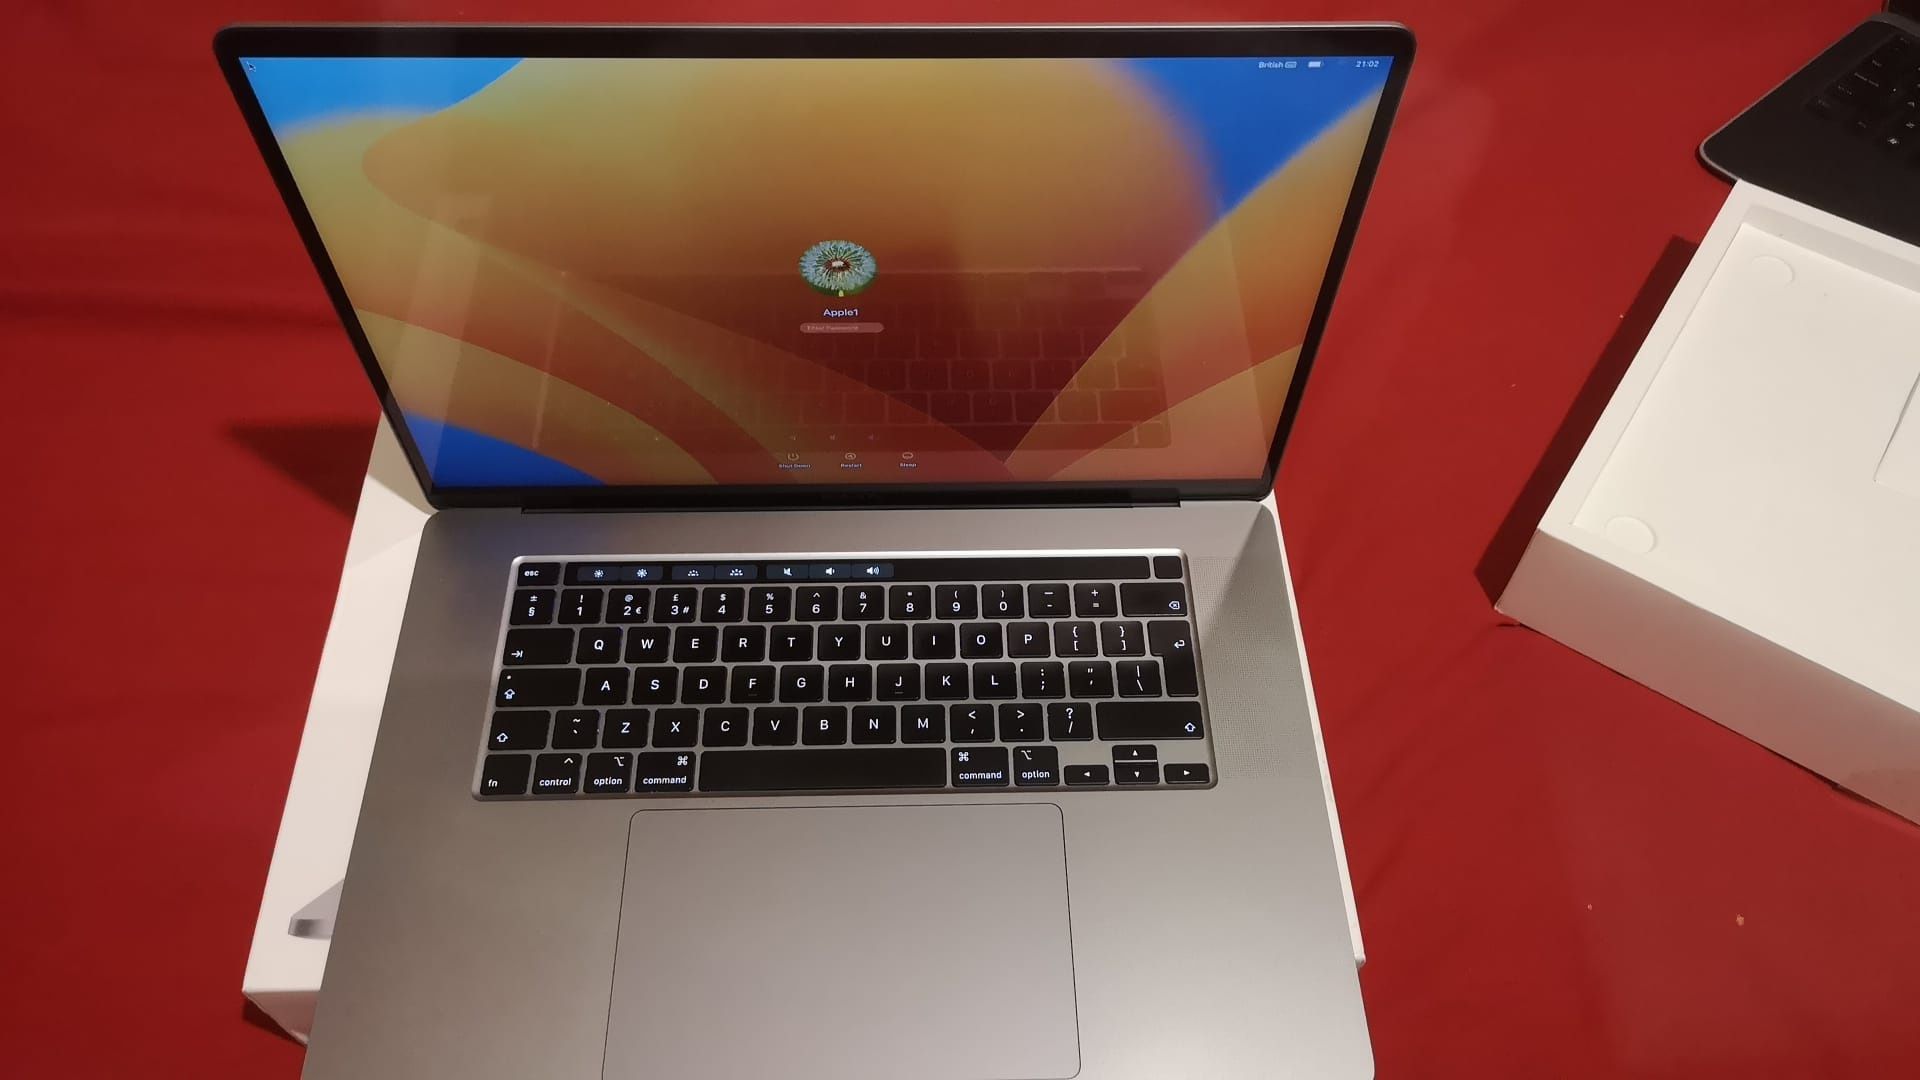 Apple Macbook, (Макбук) Pro 2019, 16 инча

-2.3GHz 8-core Intel Core i